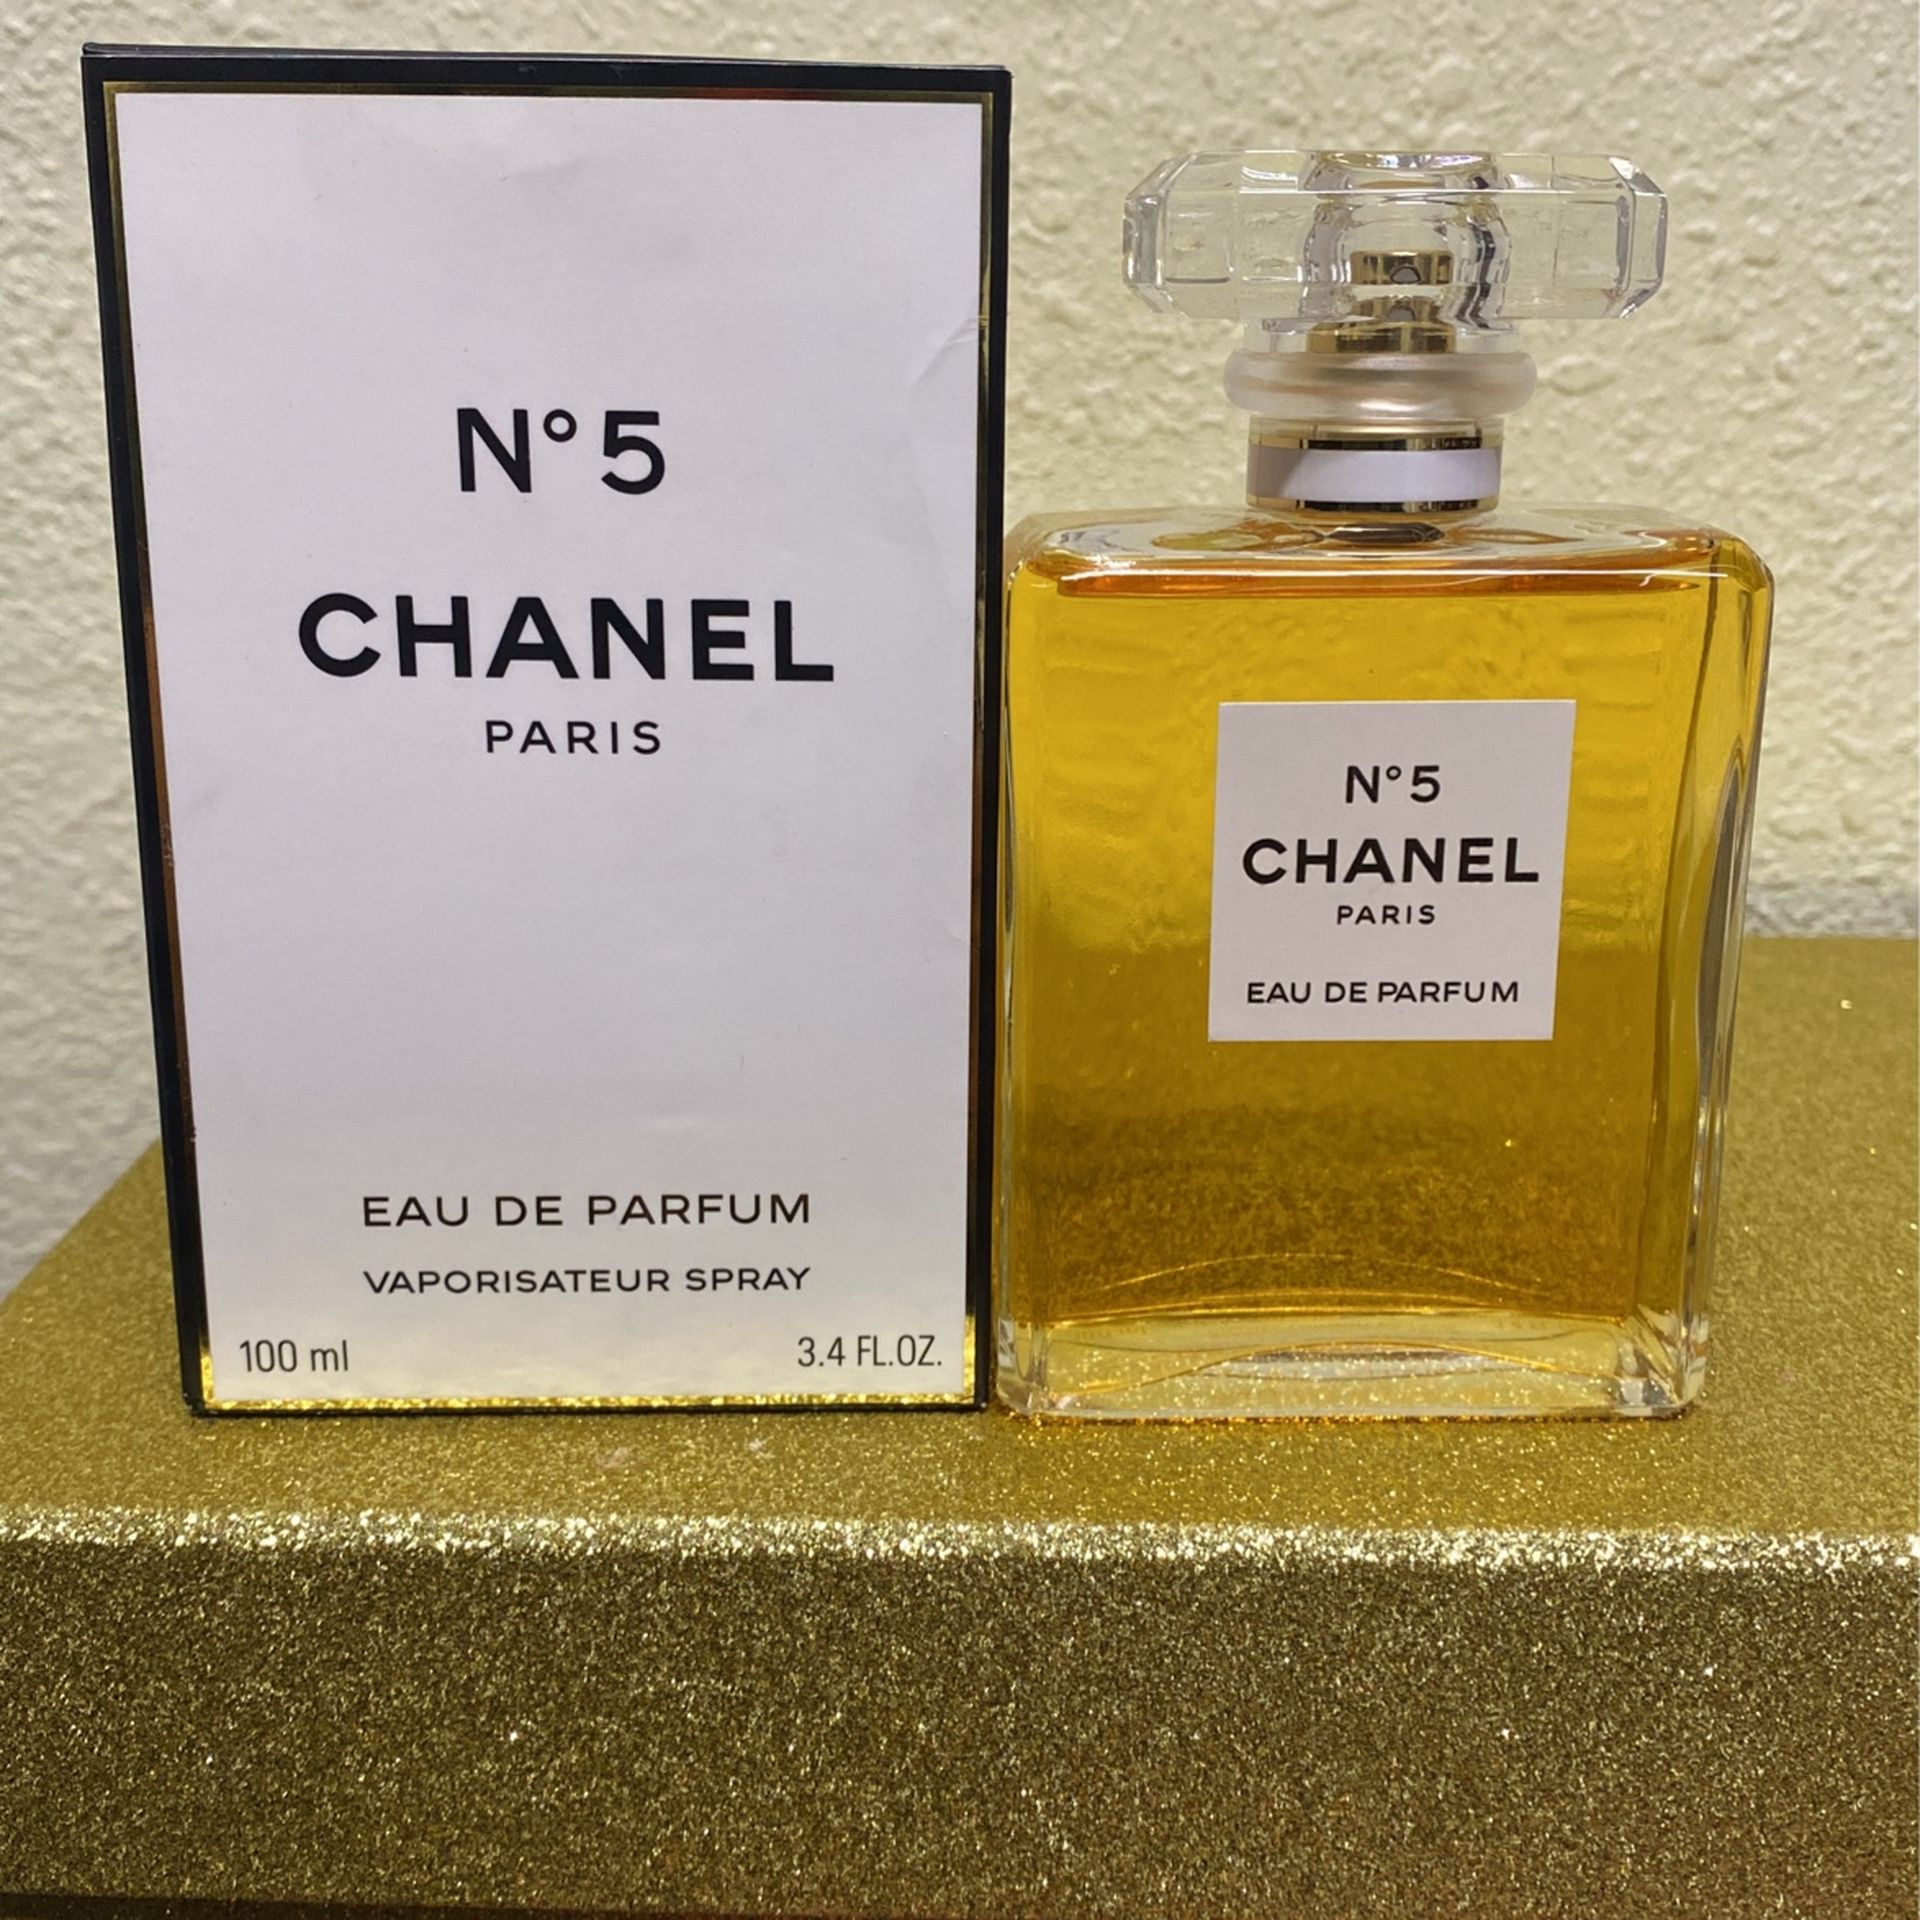 Chanel No. 5 Perfume 